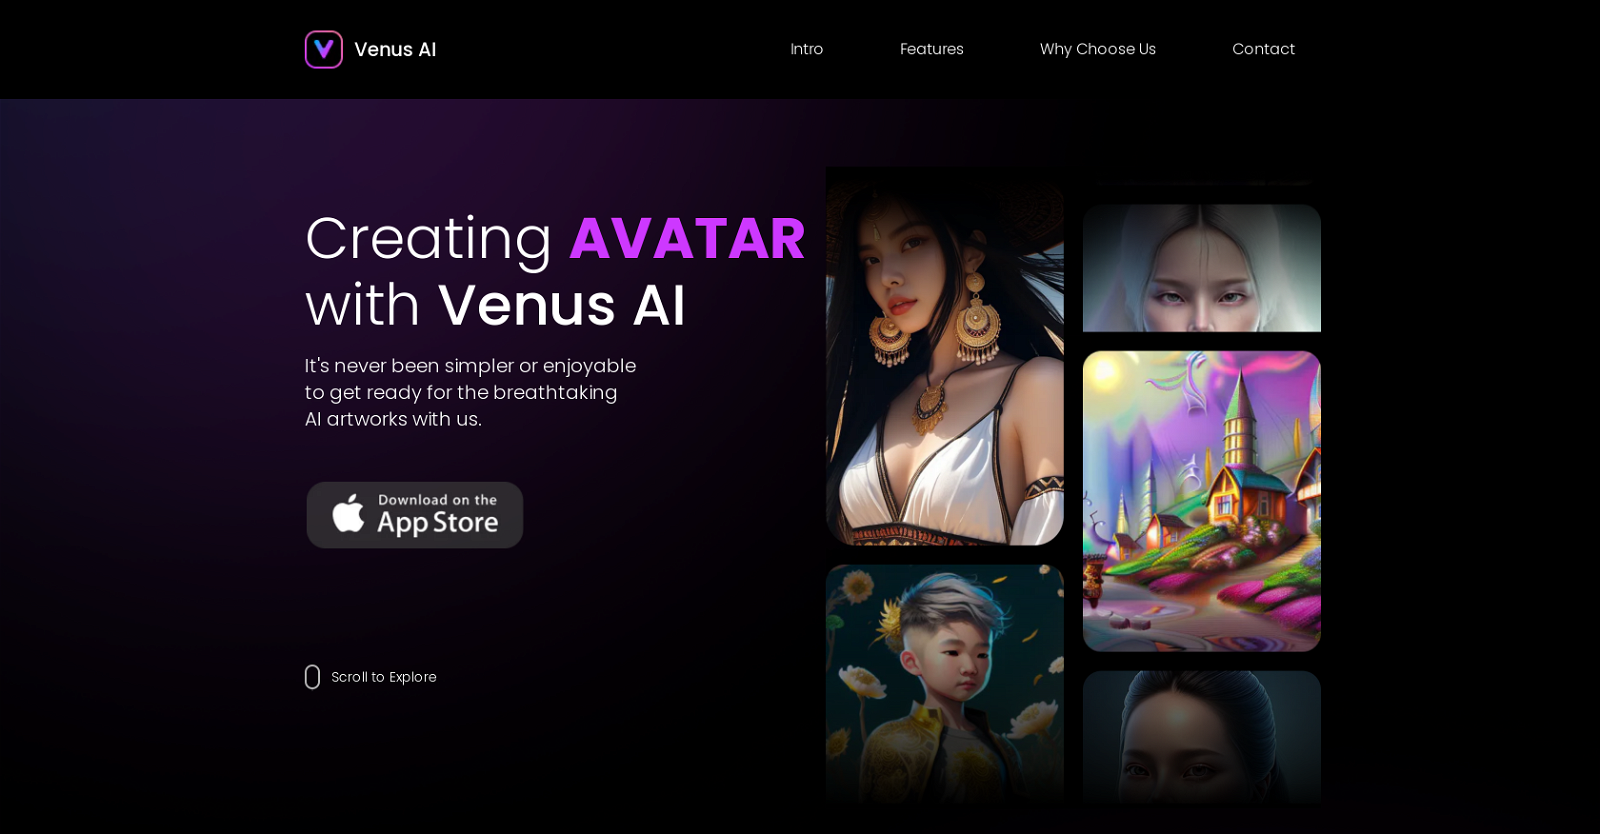 Venus AI website